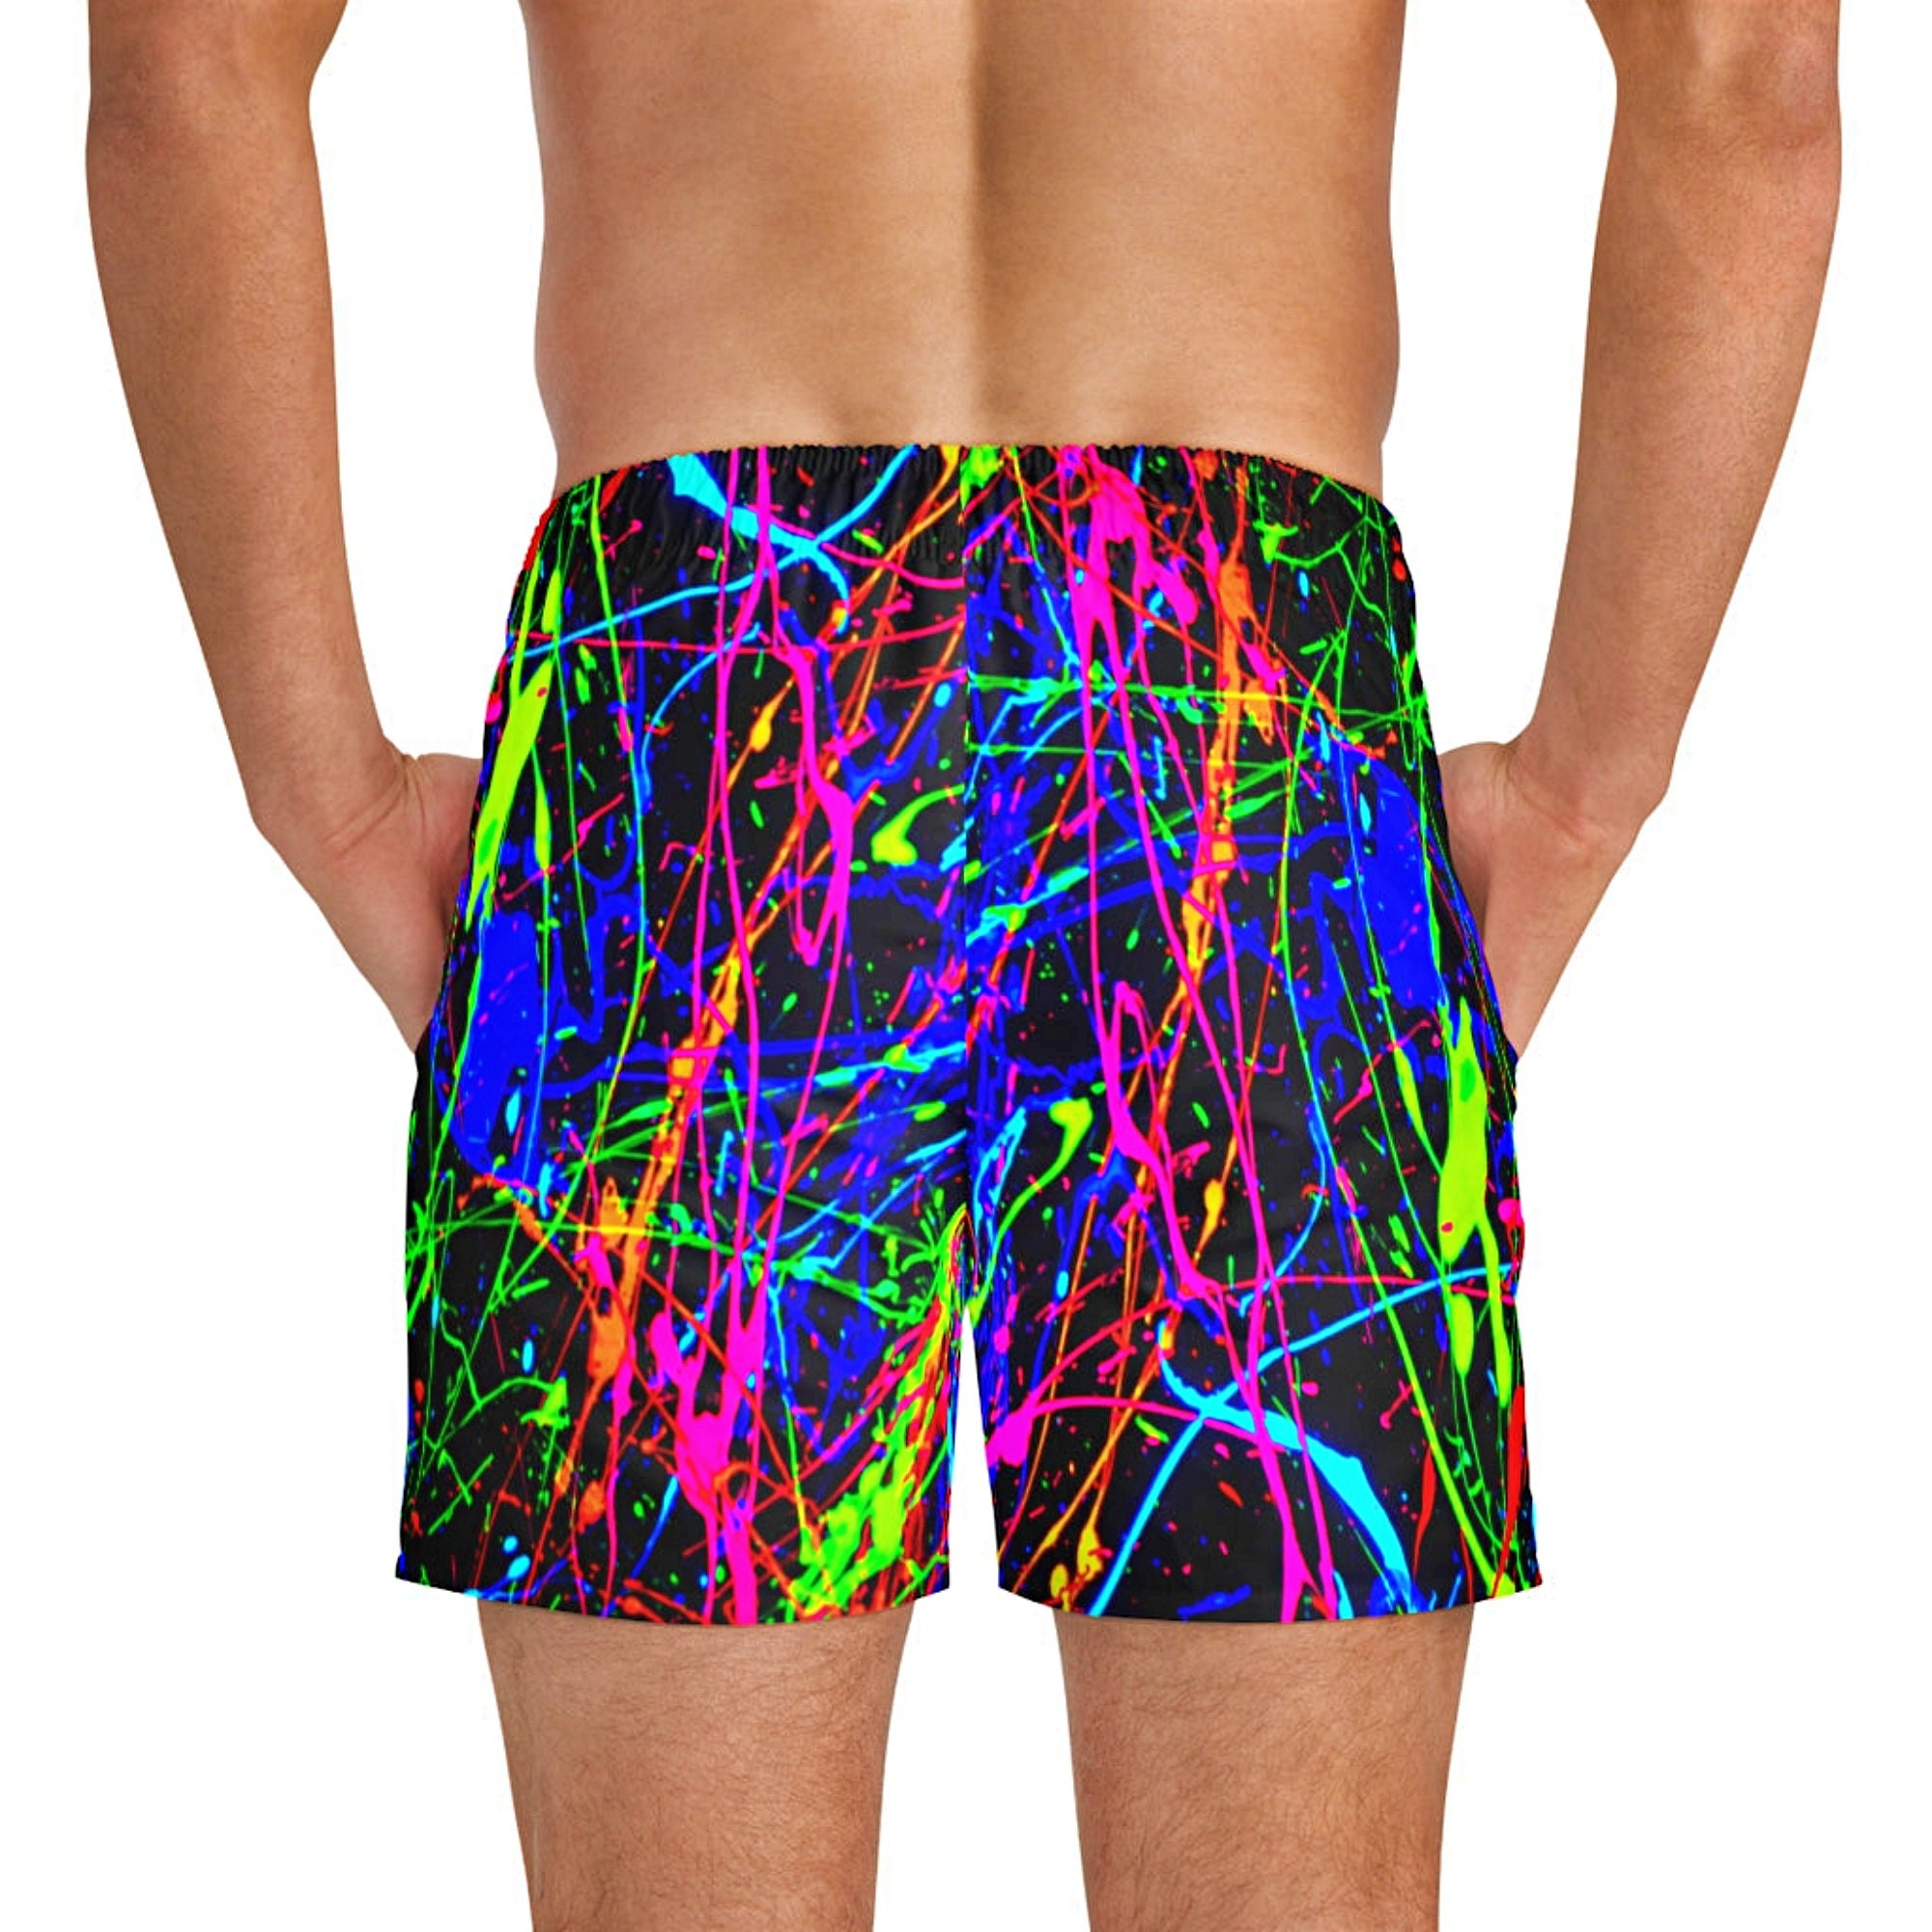 Trippy Neon Paint Party Pants Festival Shorts sold by Chris Sagan cfp awma, SKU 40318494